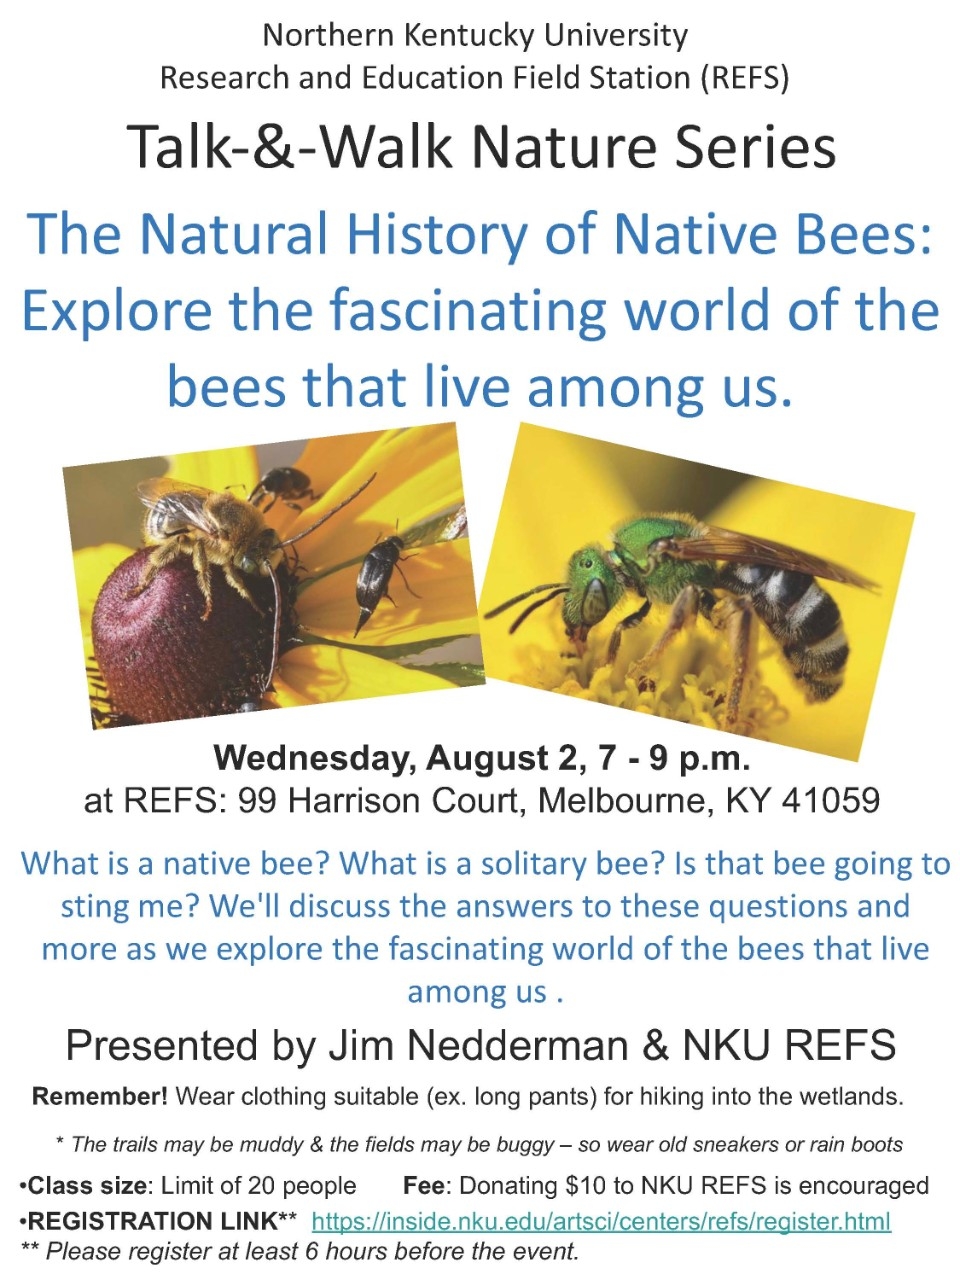 NKU REFS Talk-&-Walk - Native Bees Flyer